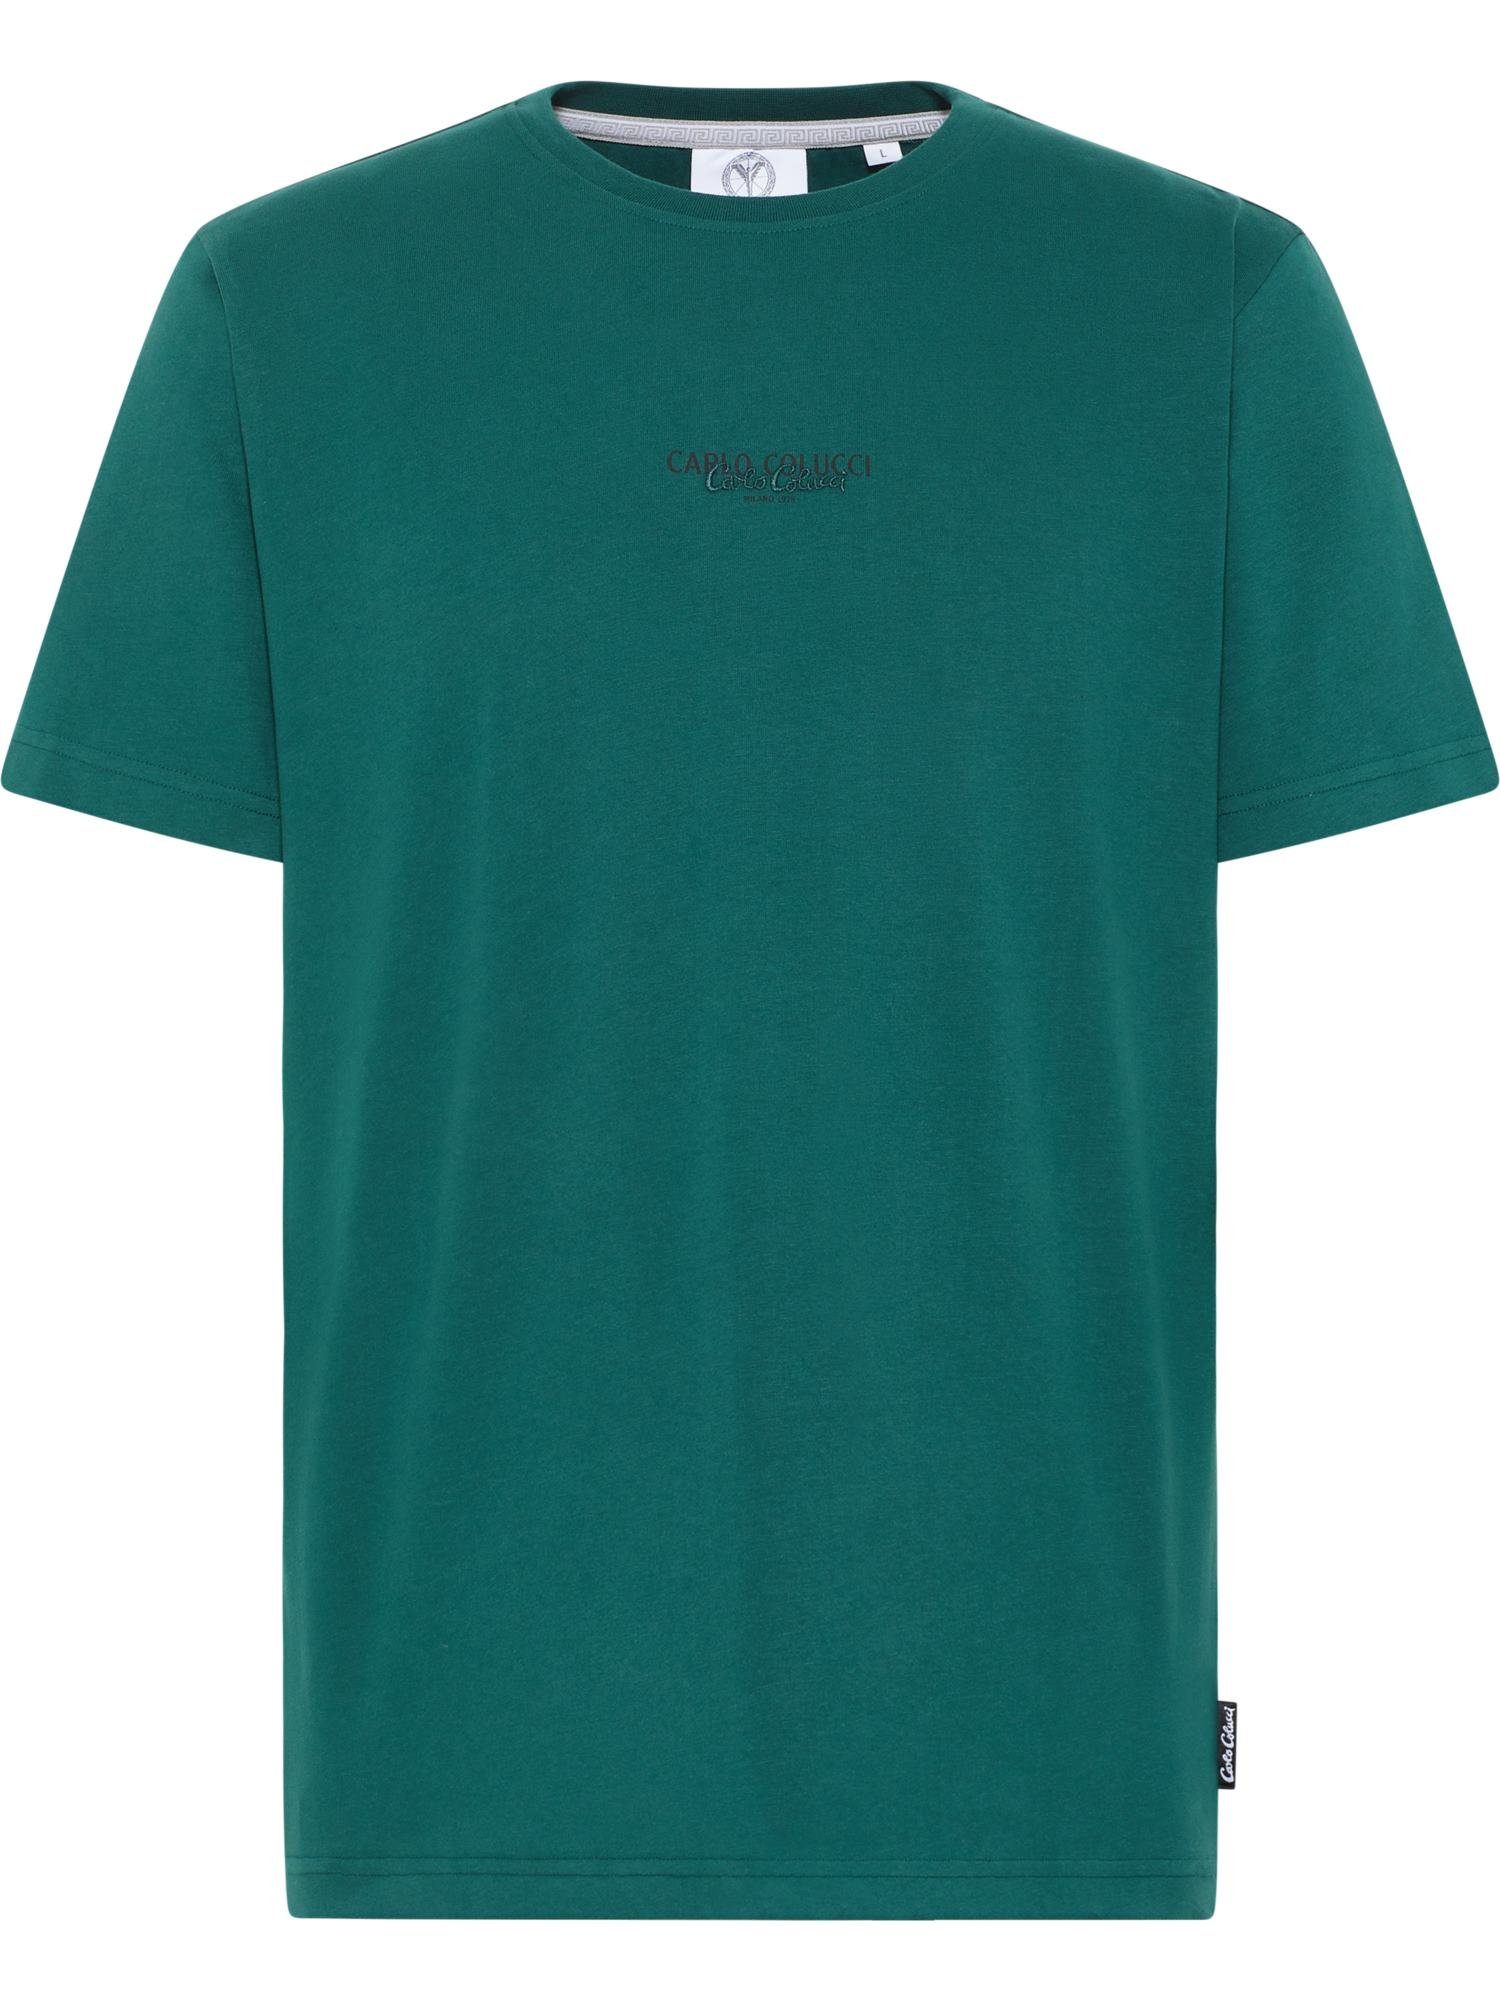 CARLO COLUCCI T-Shirt Grün Salvador De